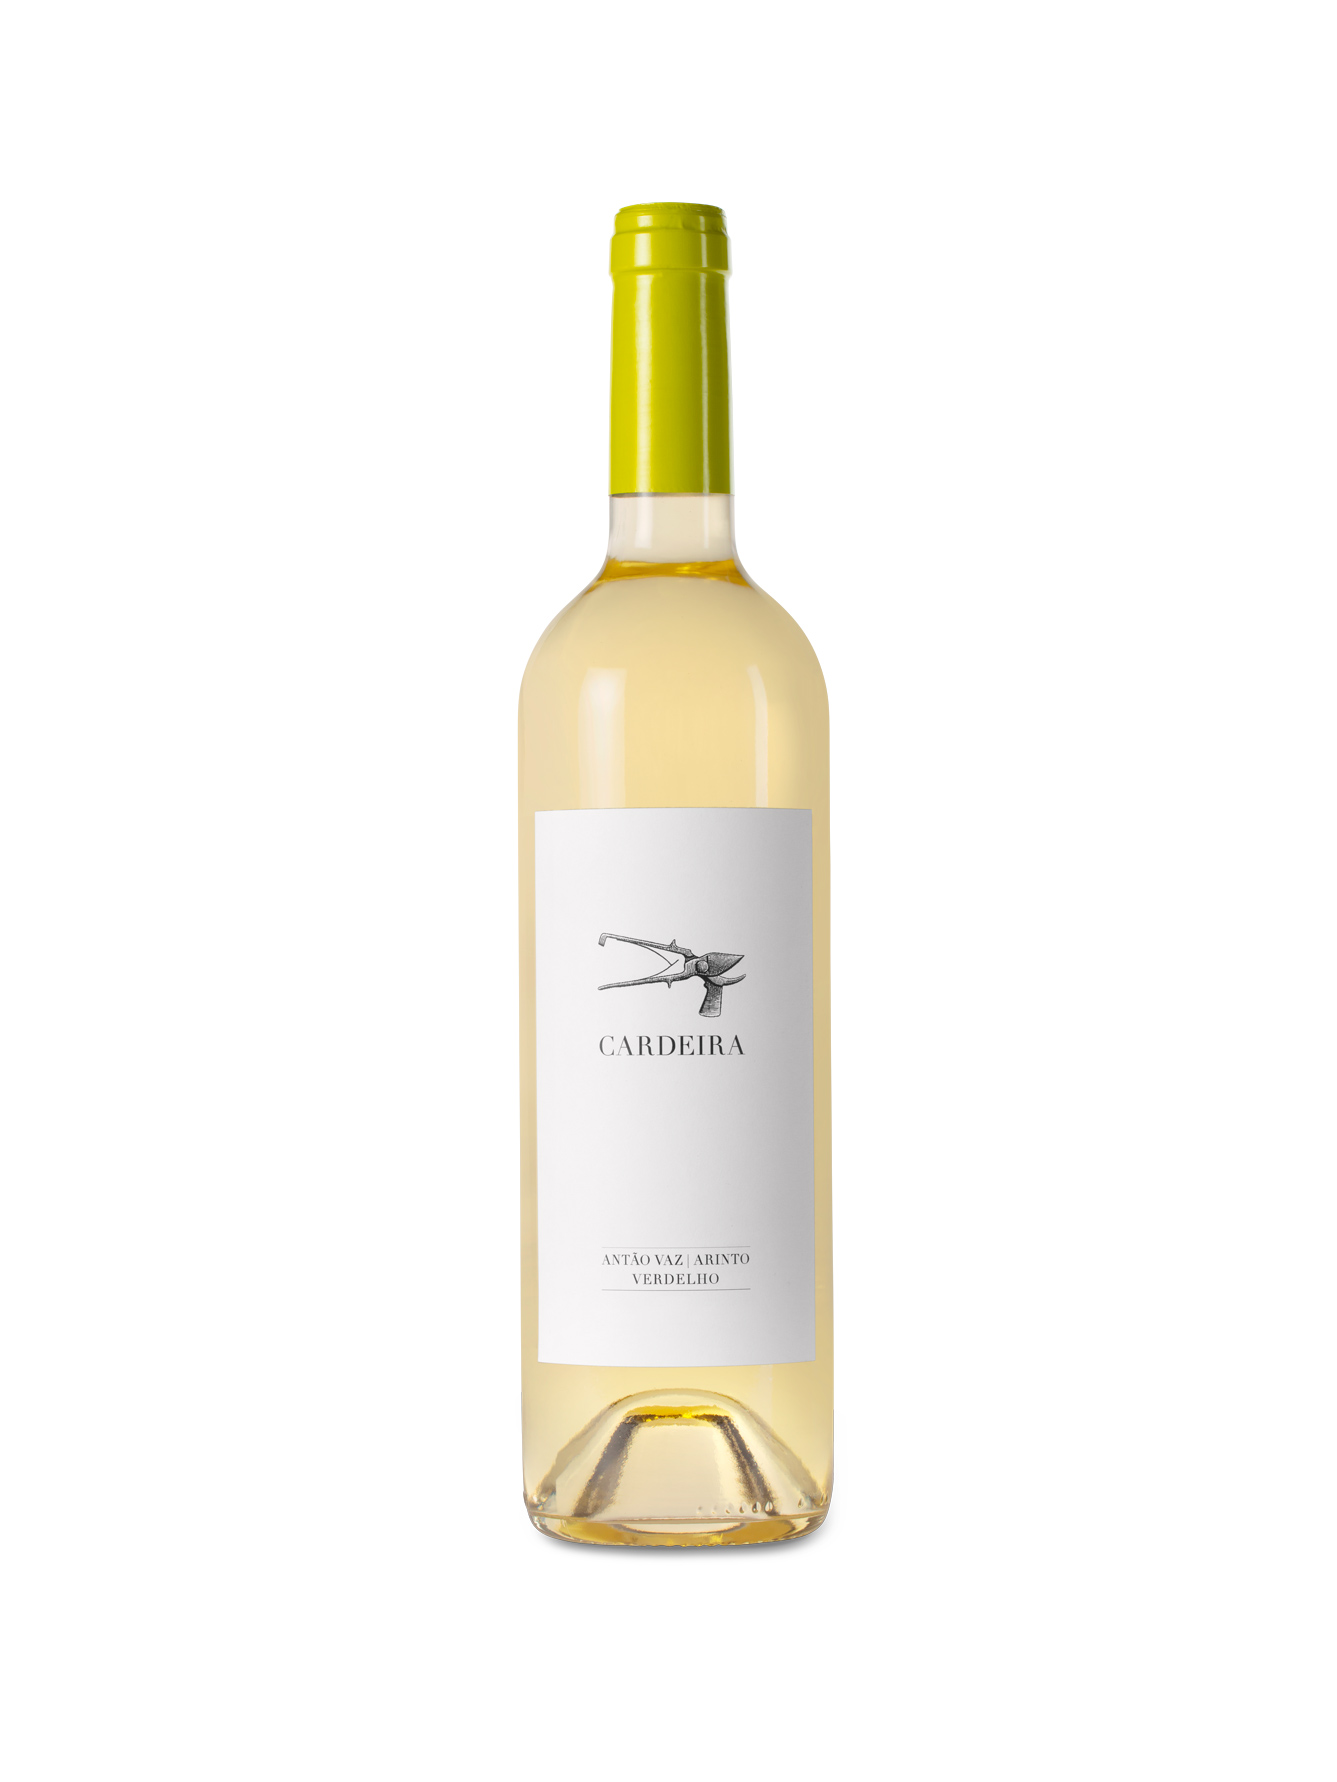 Cardeira branco. A white wine that will stimulate your senses.